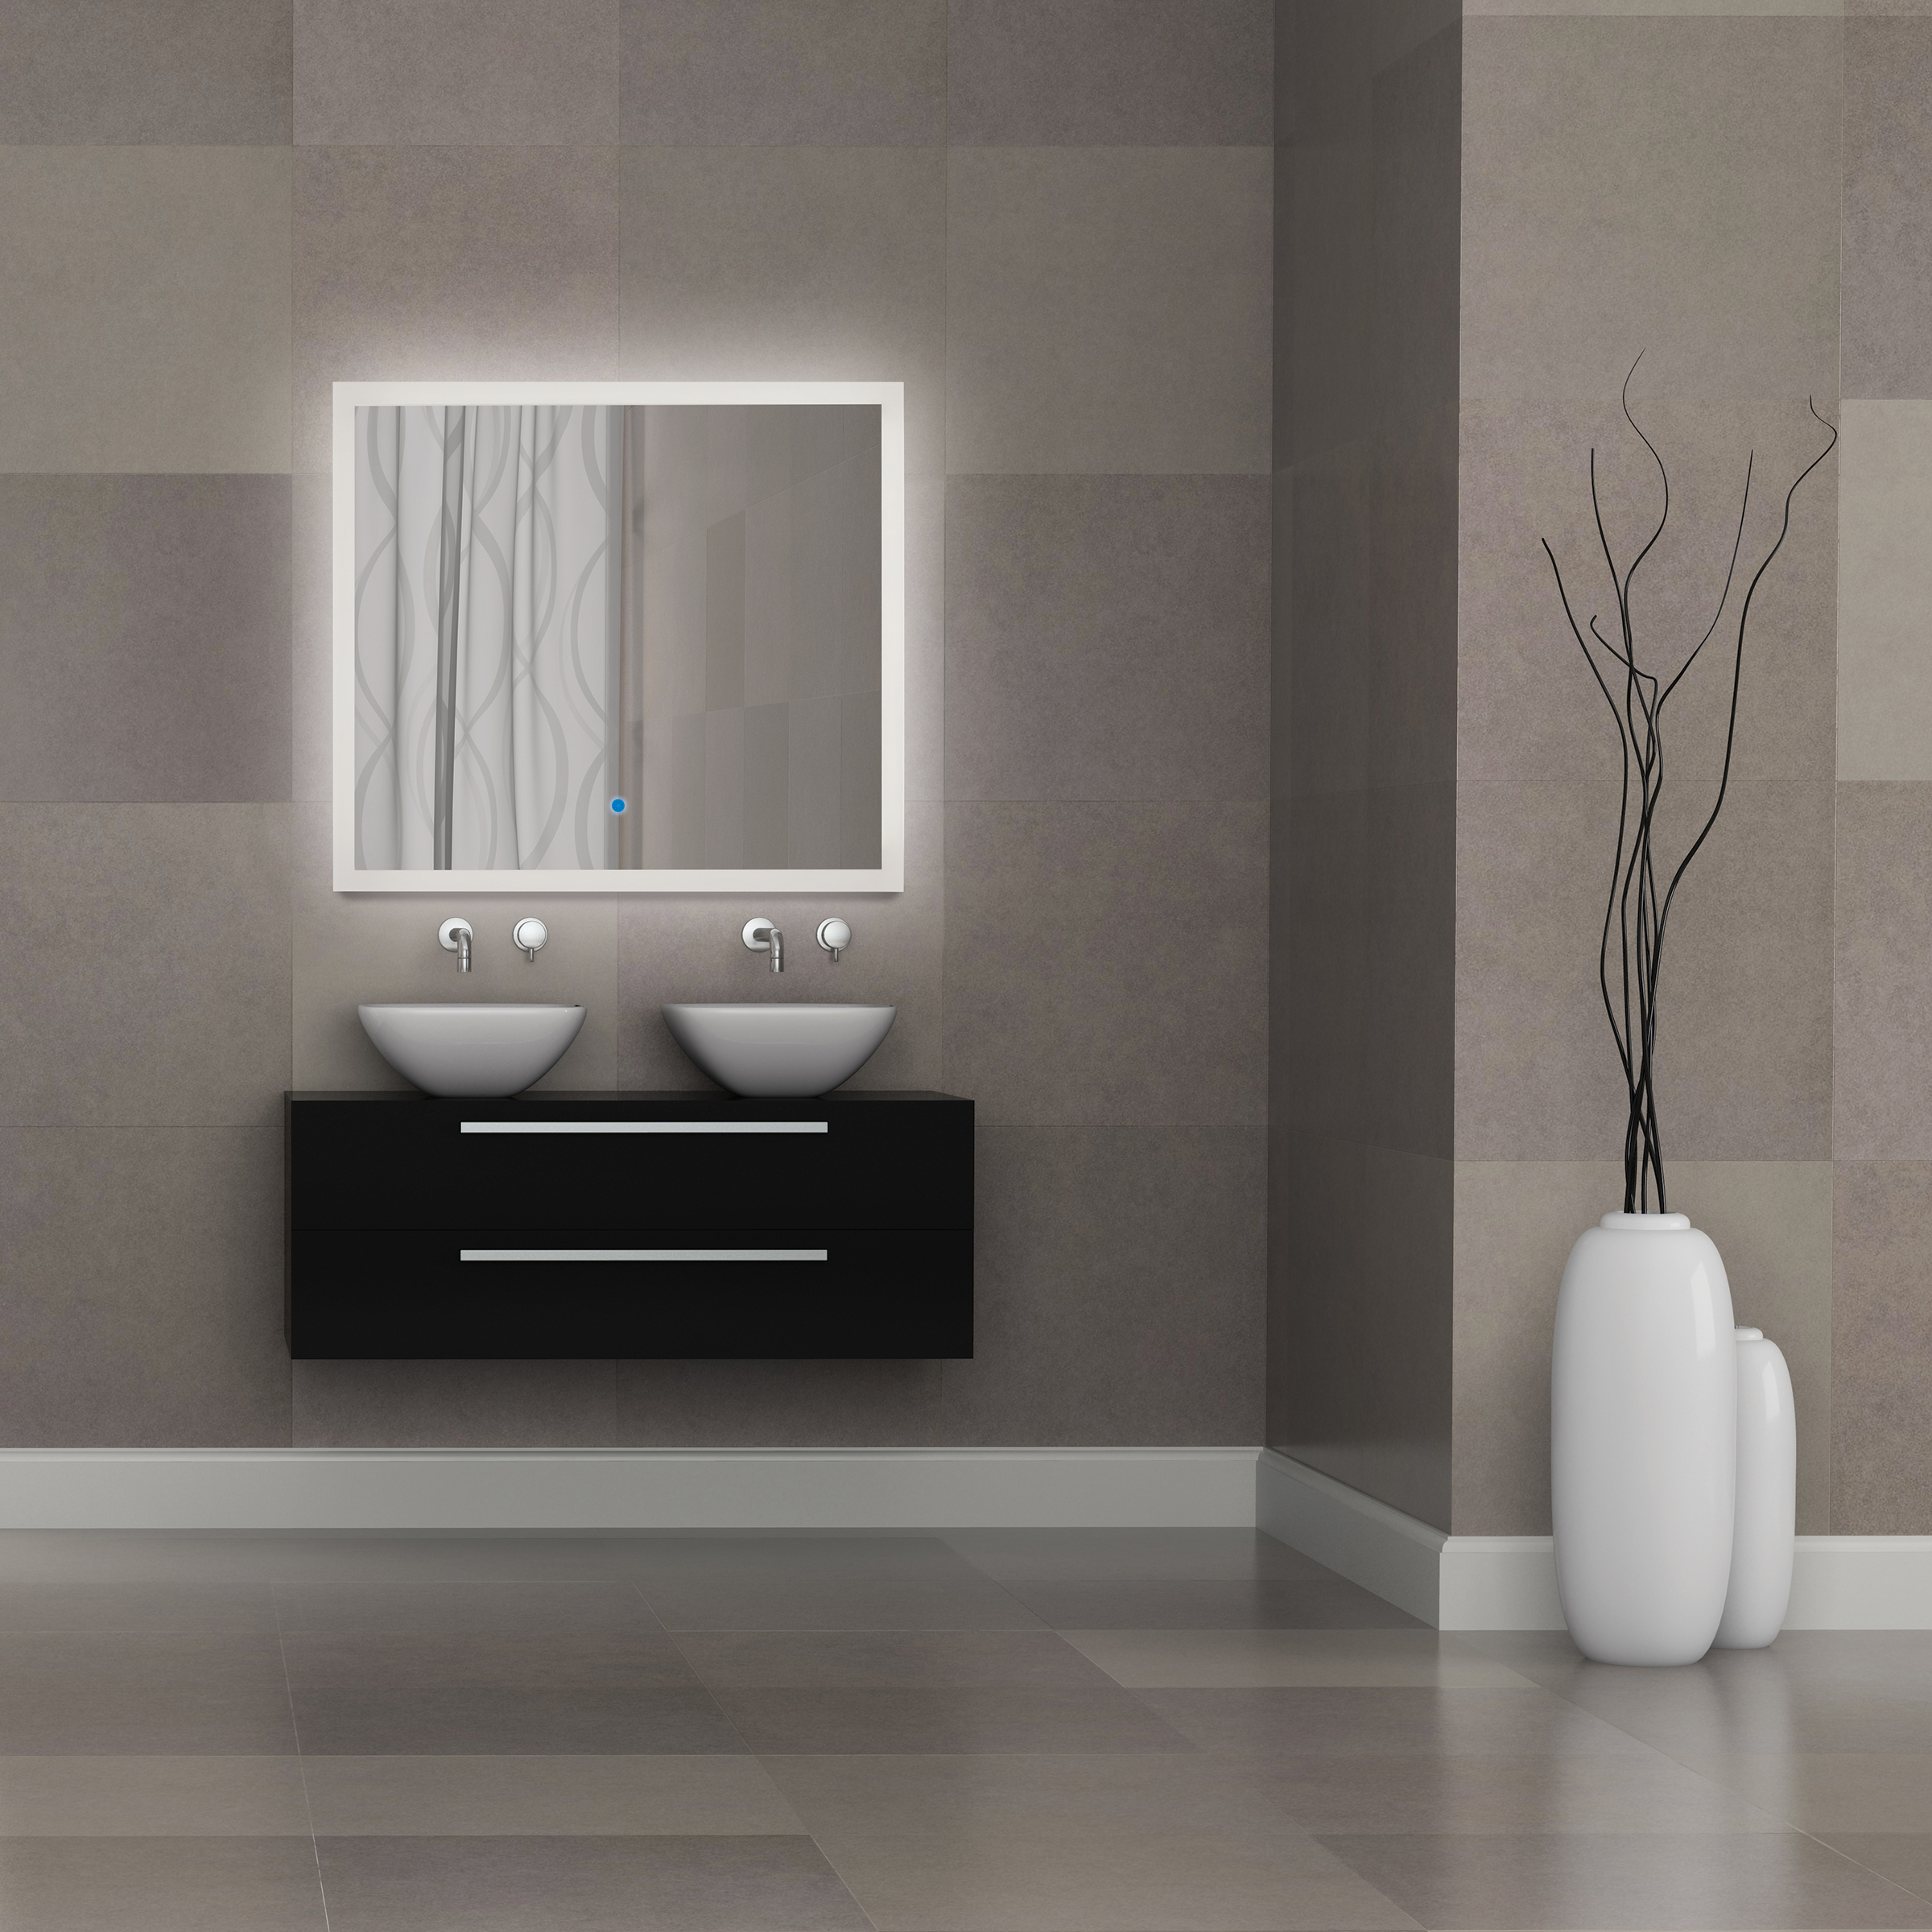 Landscape 36" x 32" Backlit Rectangular Mirror in modern bathroom with granite tile walls